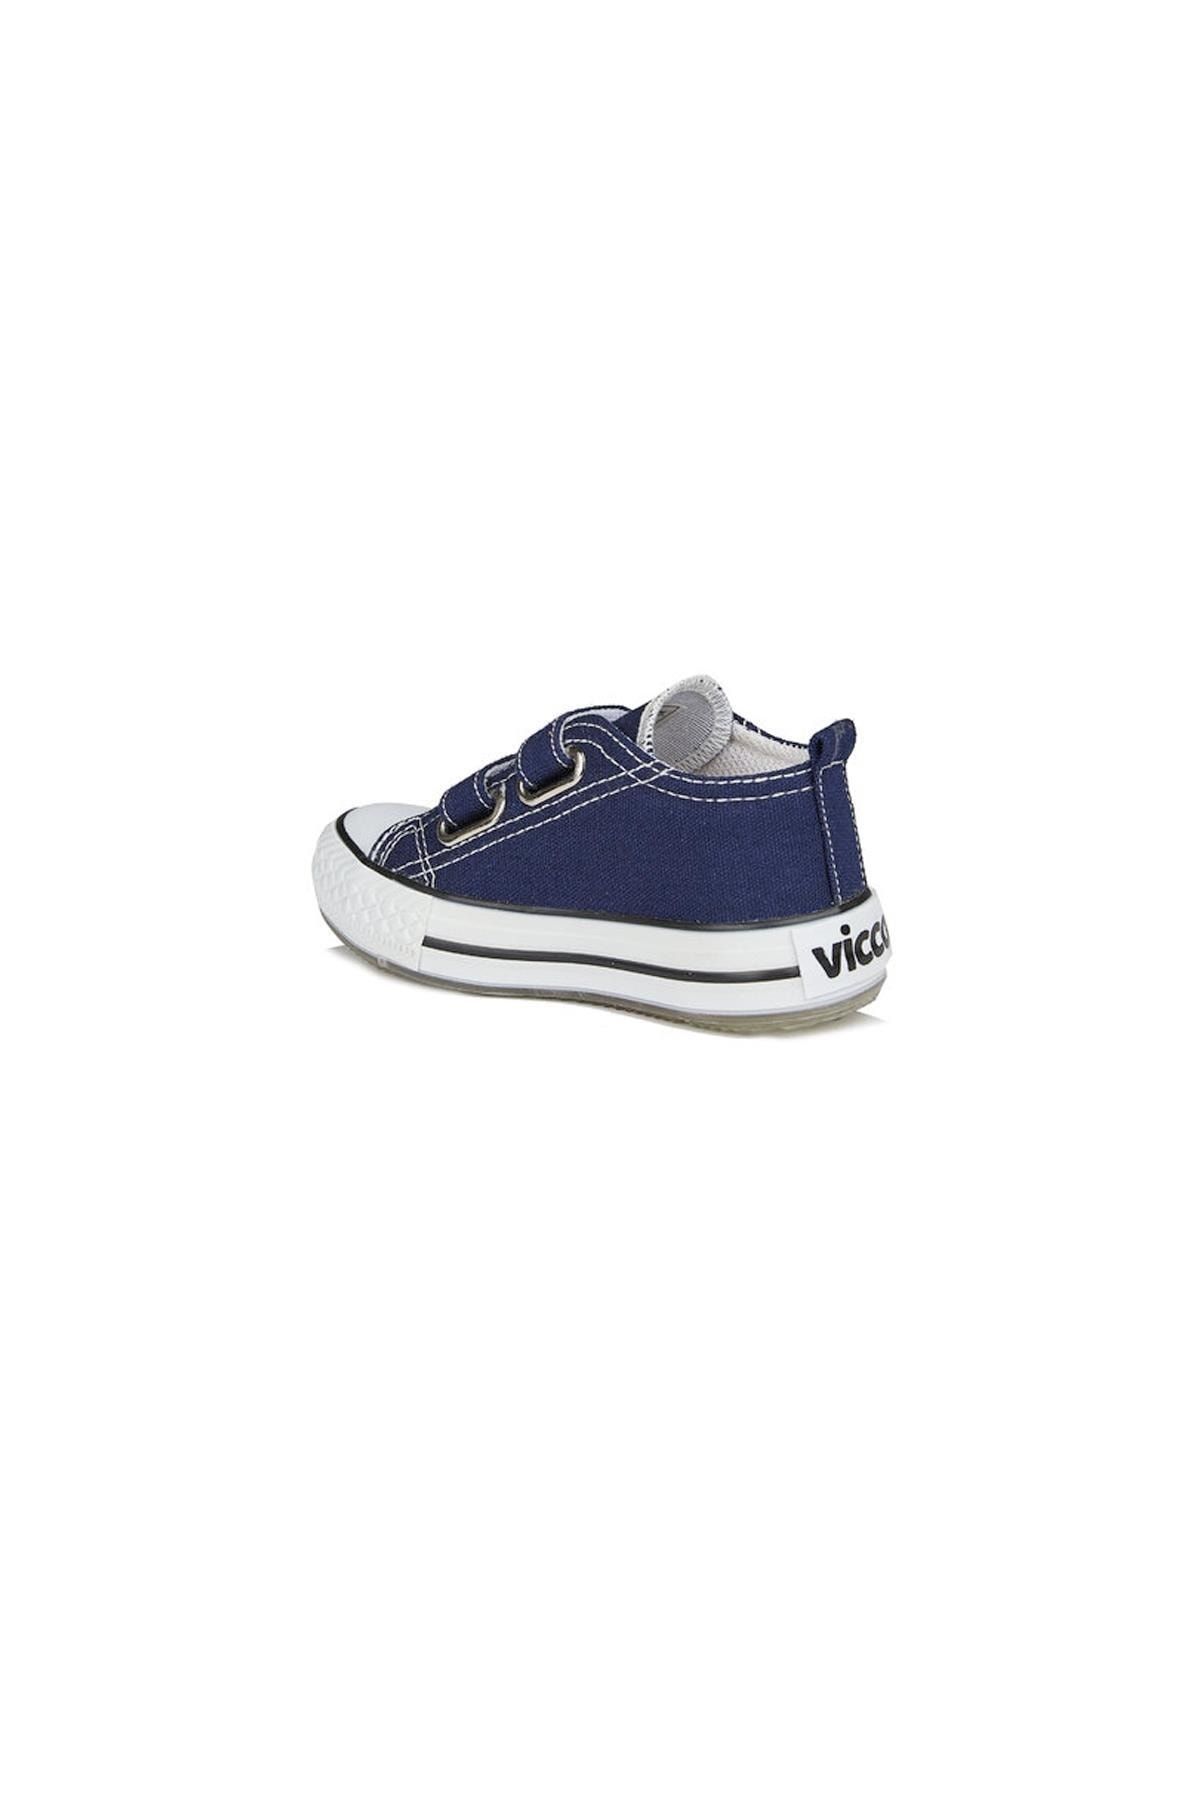 Vicco 925-p20y-150 Pino Unısex Çocuk Günlük Ayakkabı